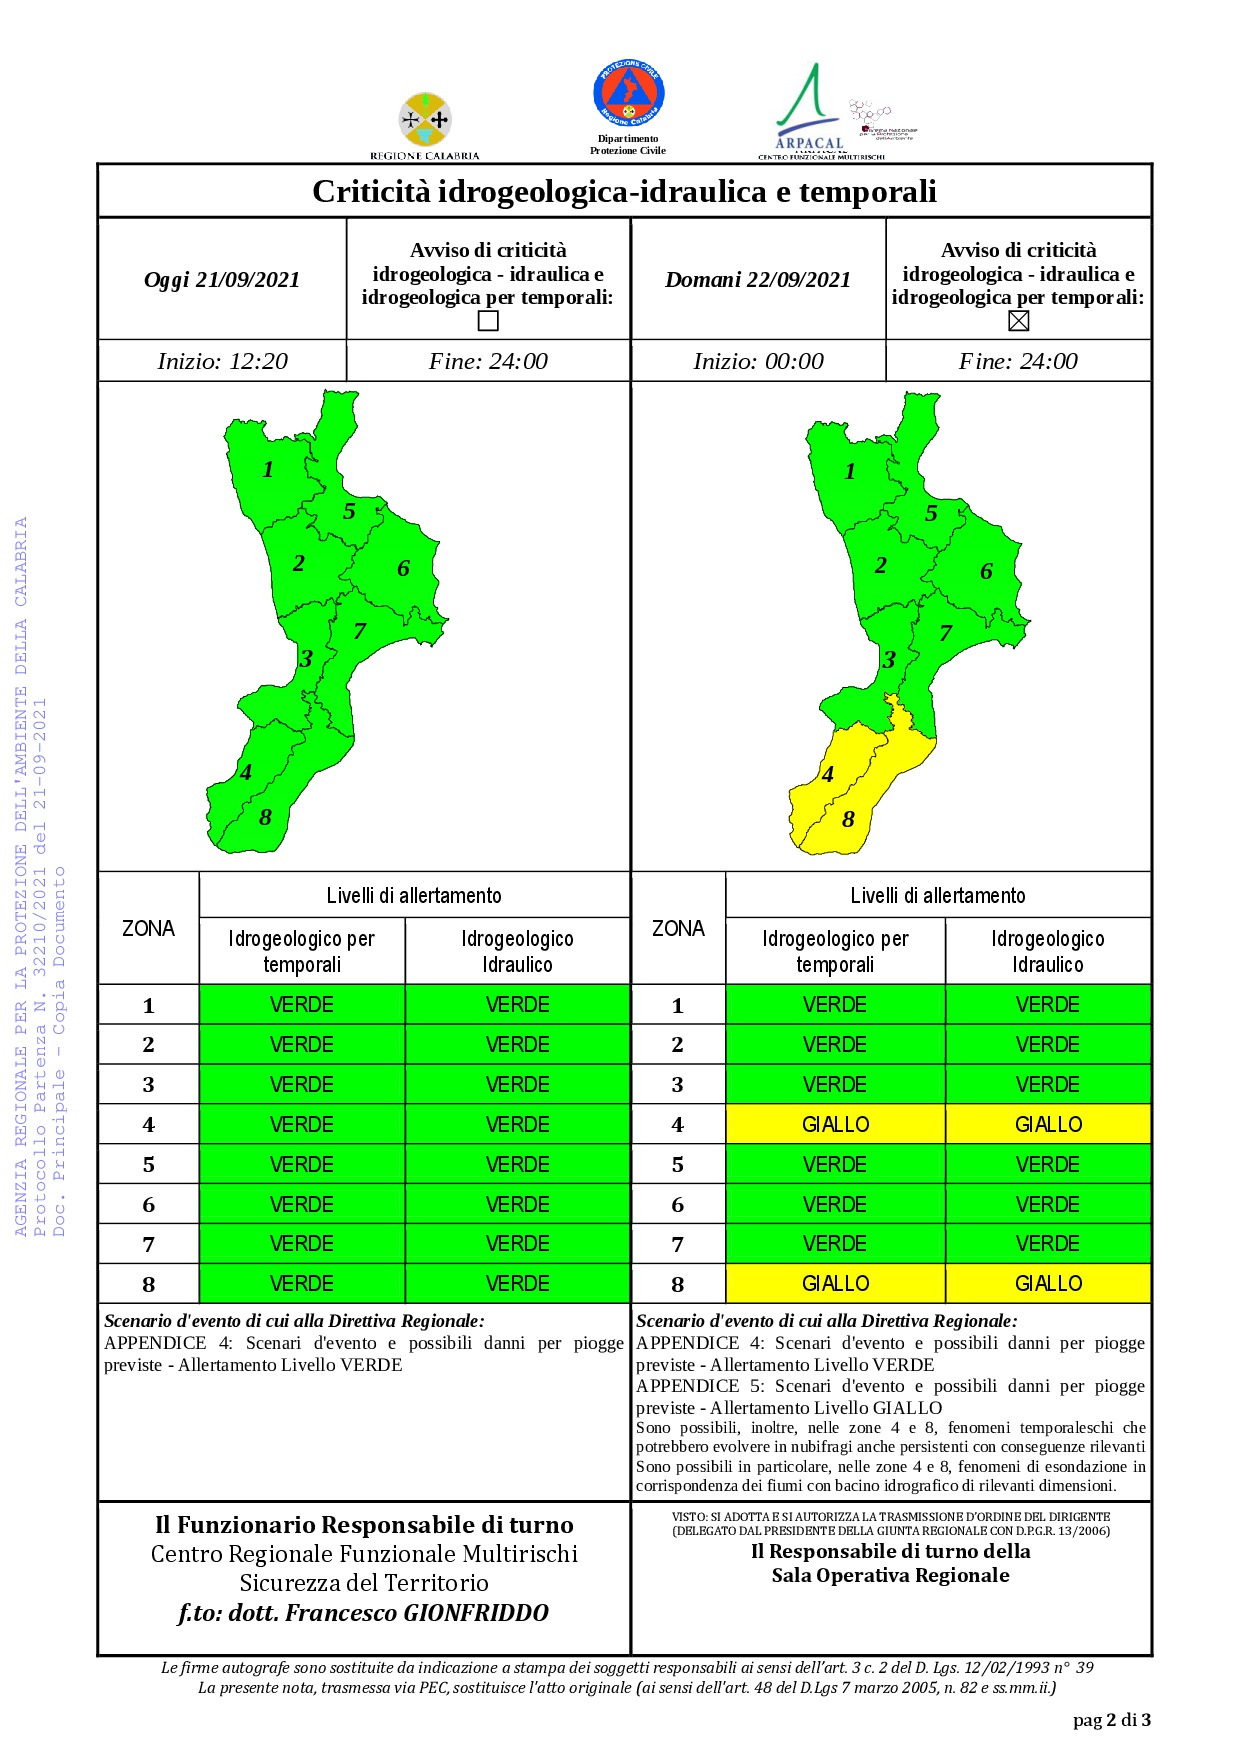 Criticità idrogeologica-idraulica e temporali in Calabria 21-09-2021